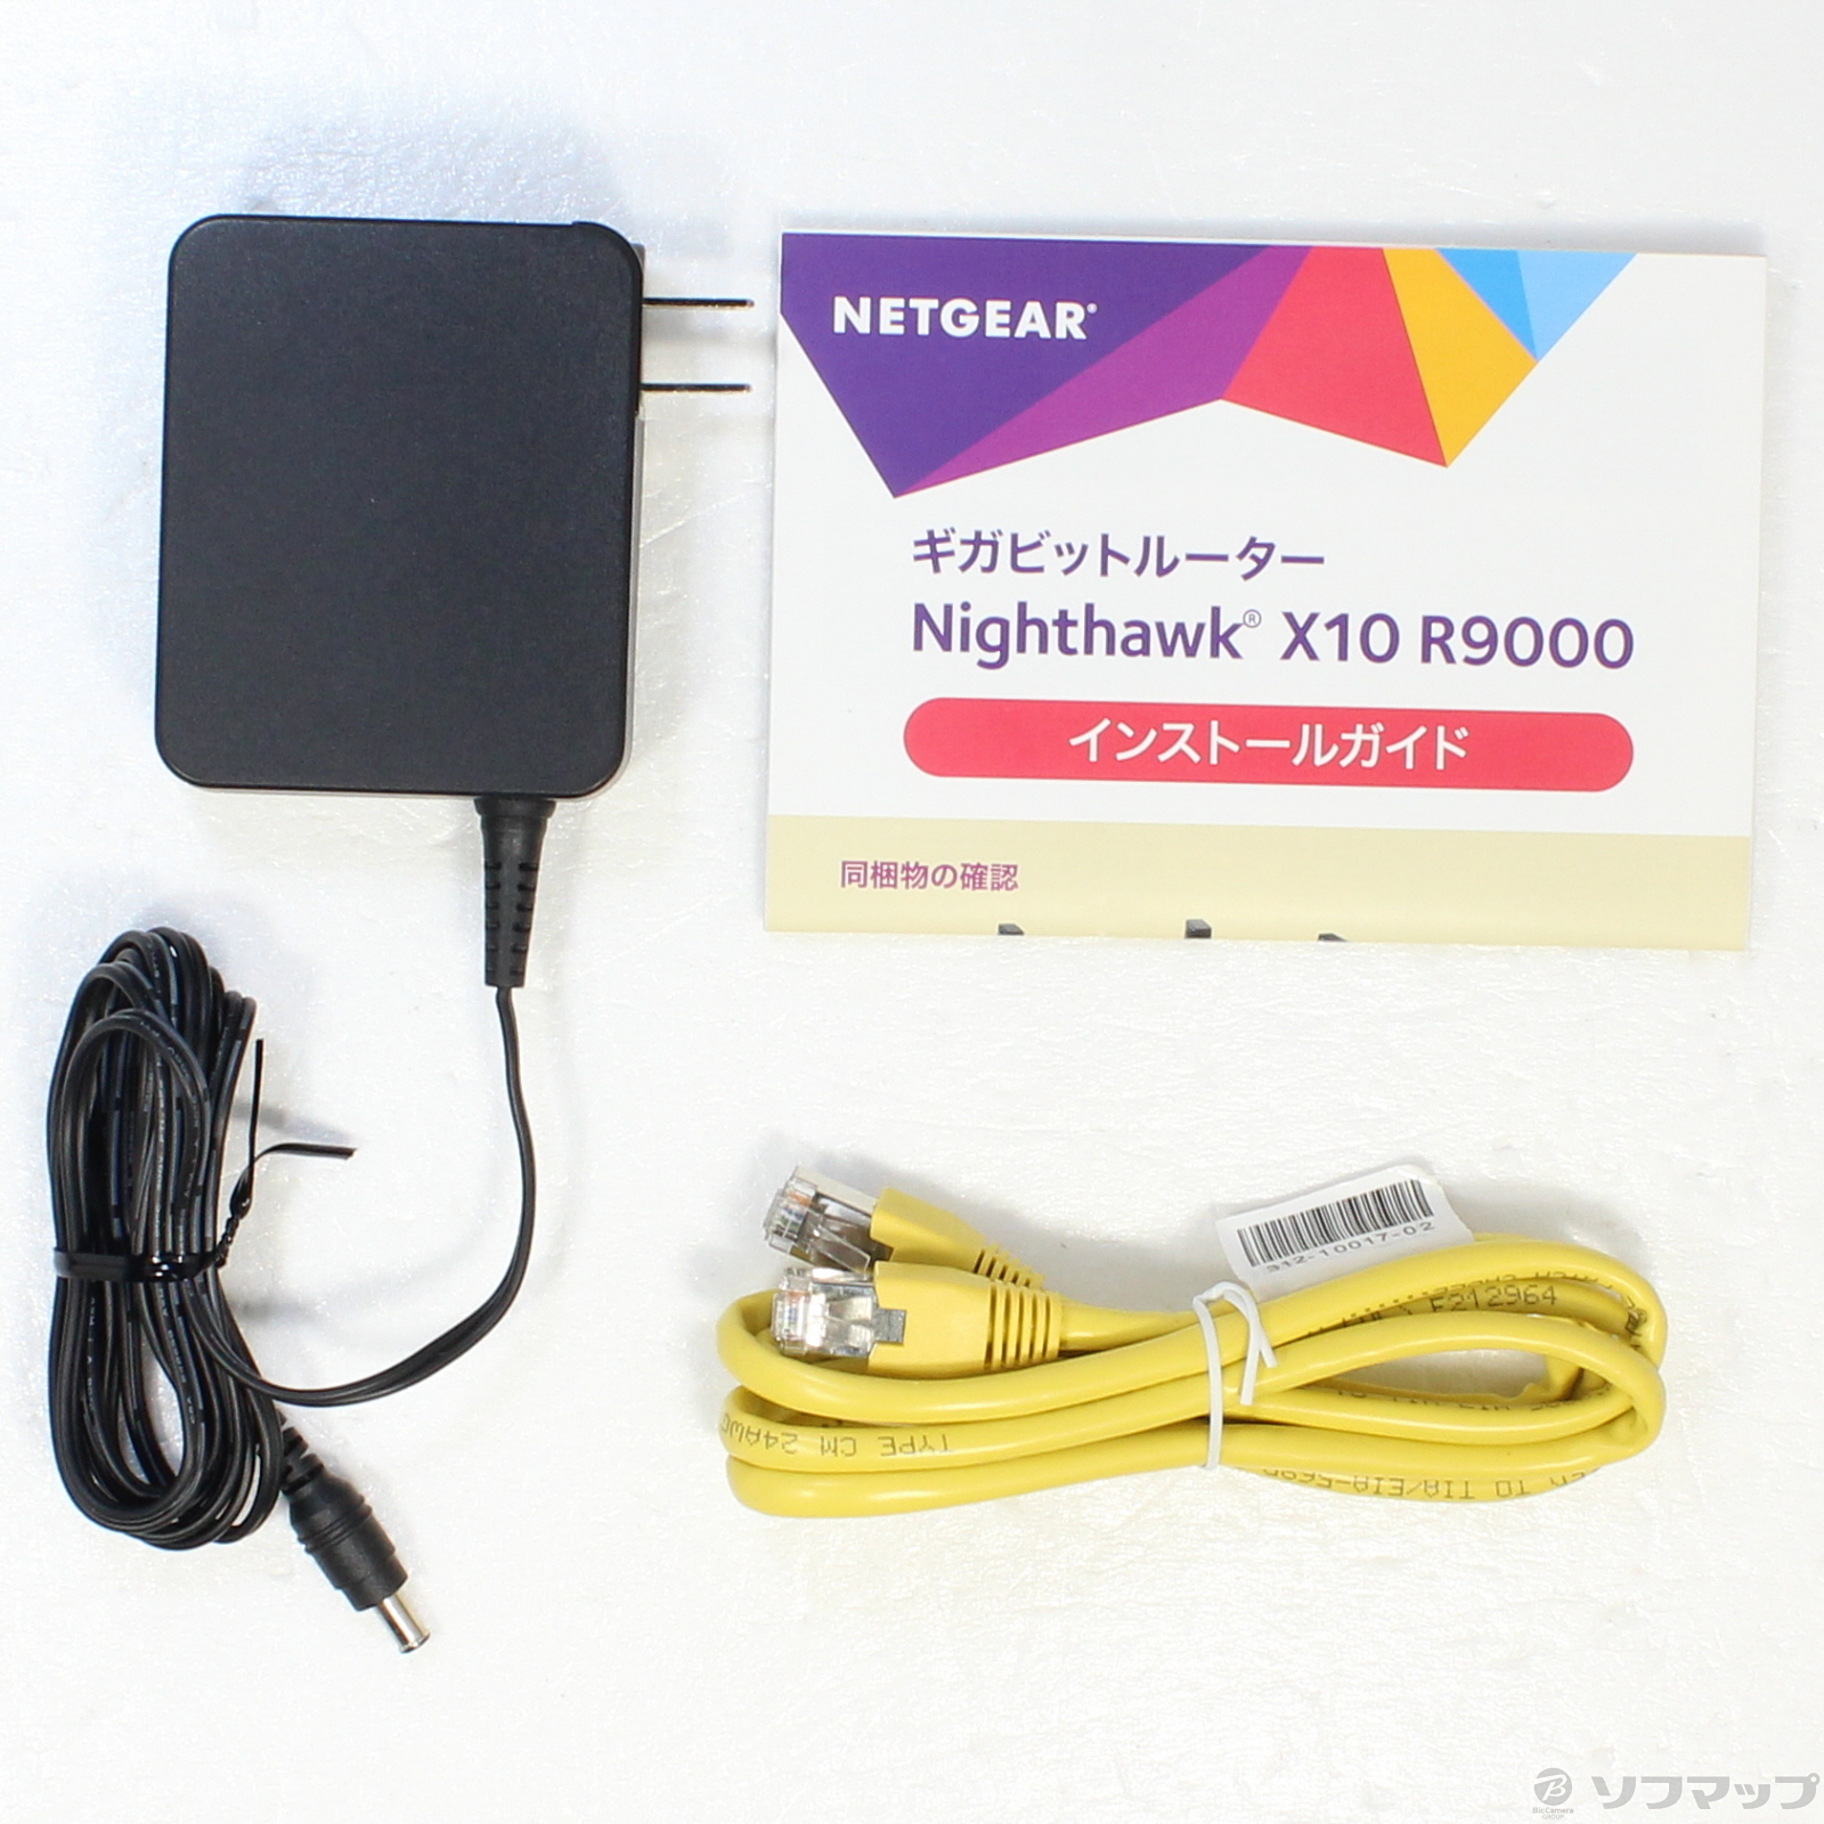 Nighthawk X10 R9000-100JPS